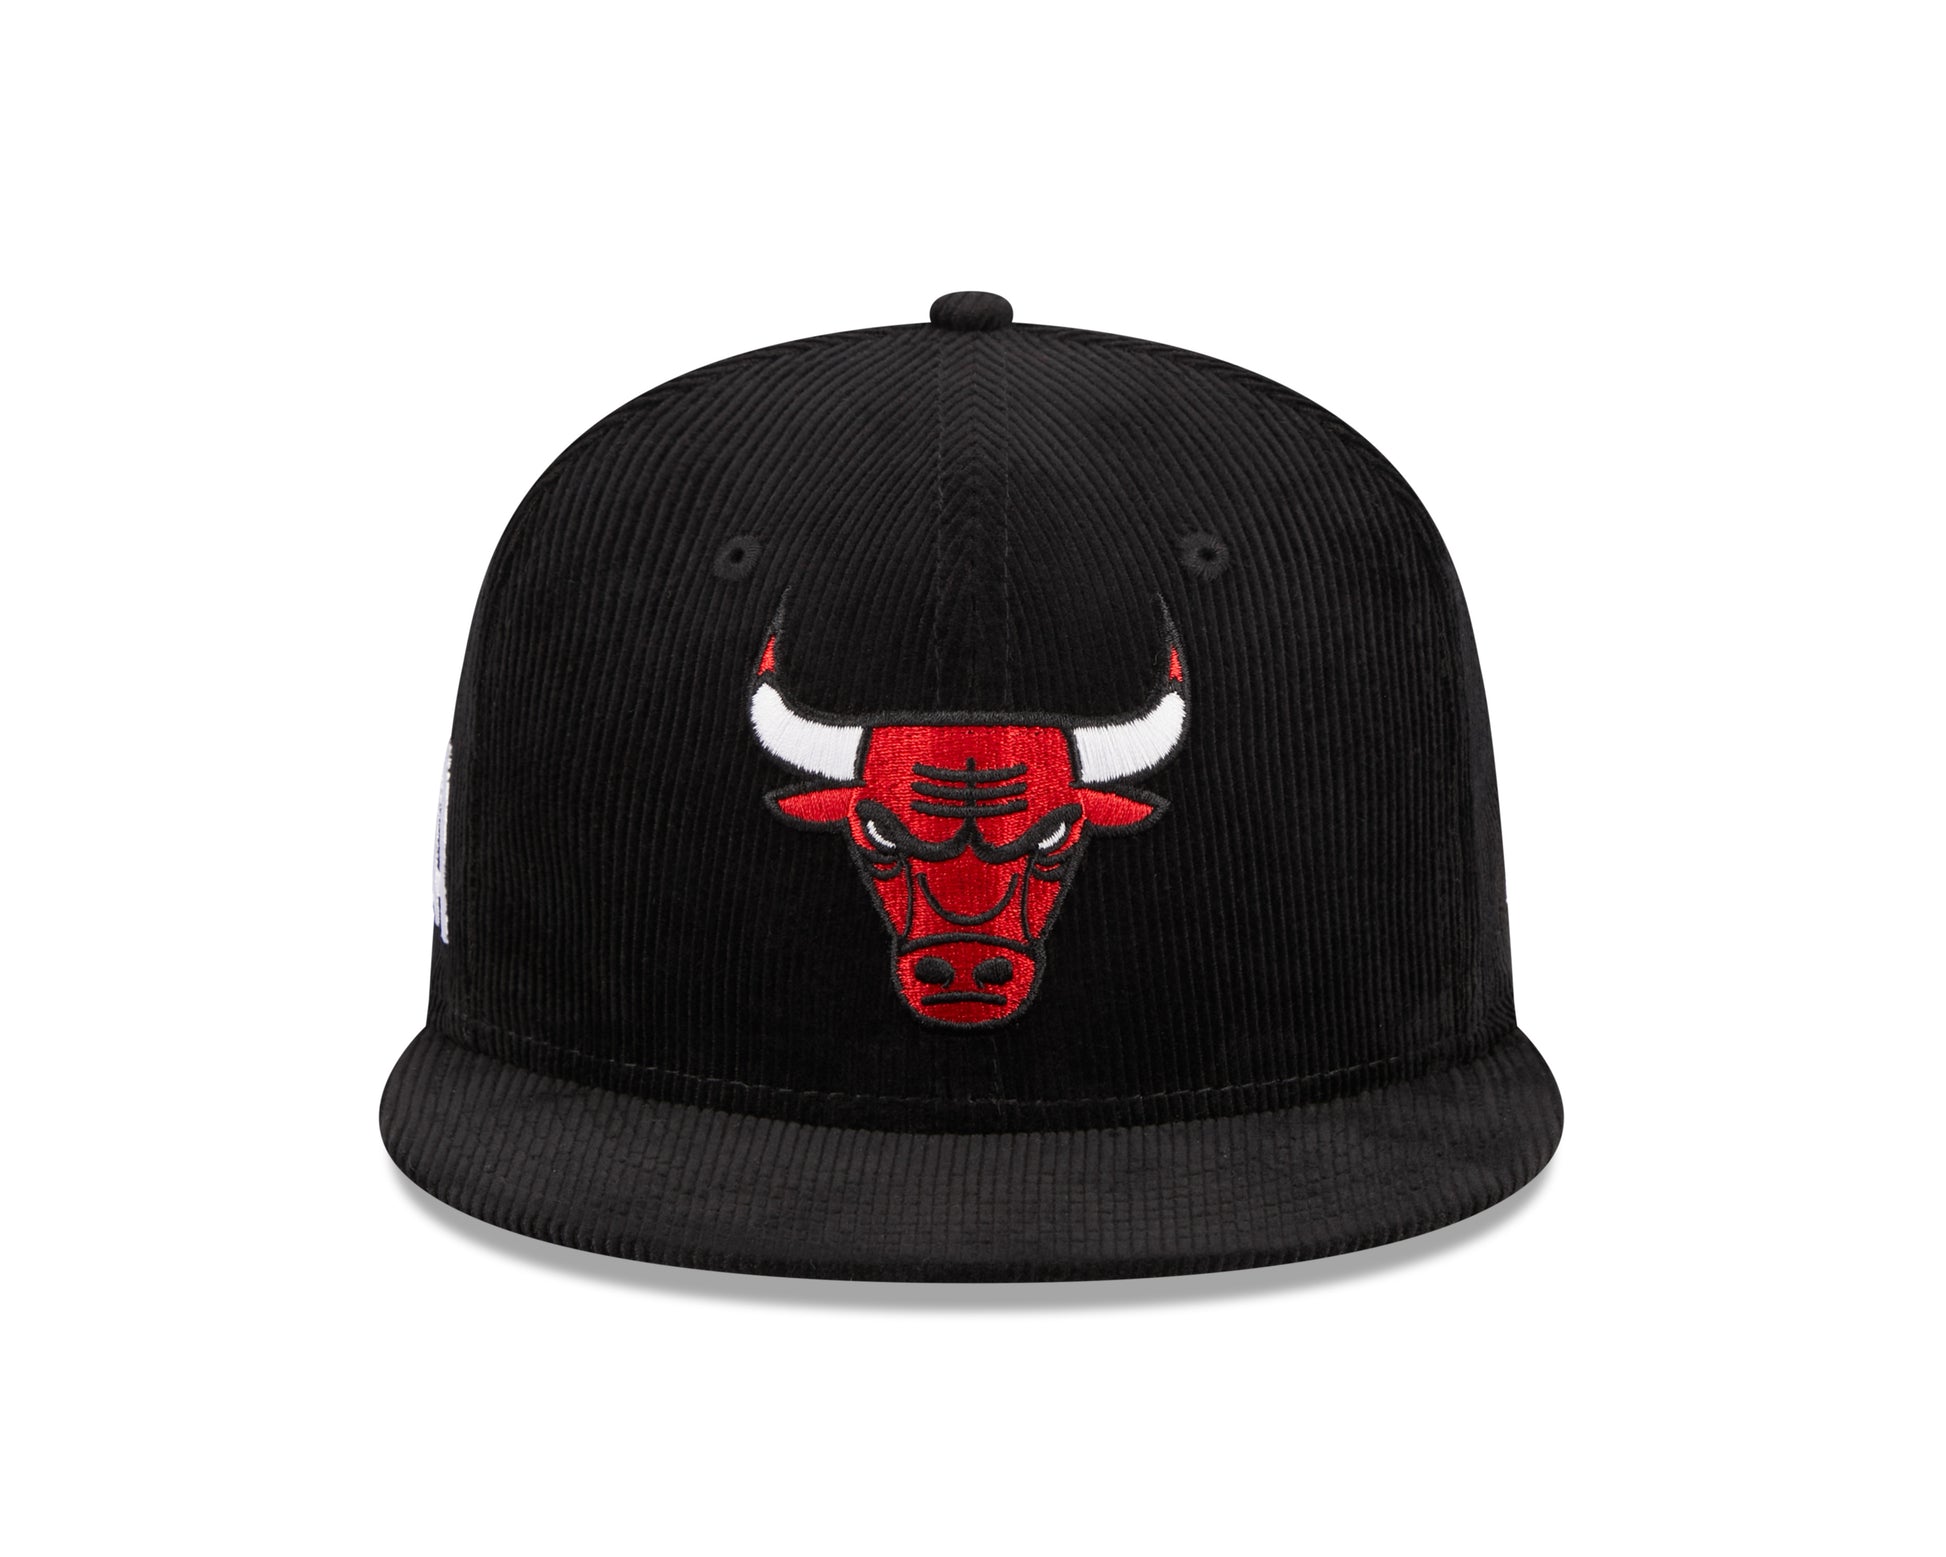 New Era - Chicago Bulls Throwback Cord - Black - Headz Up 